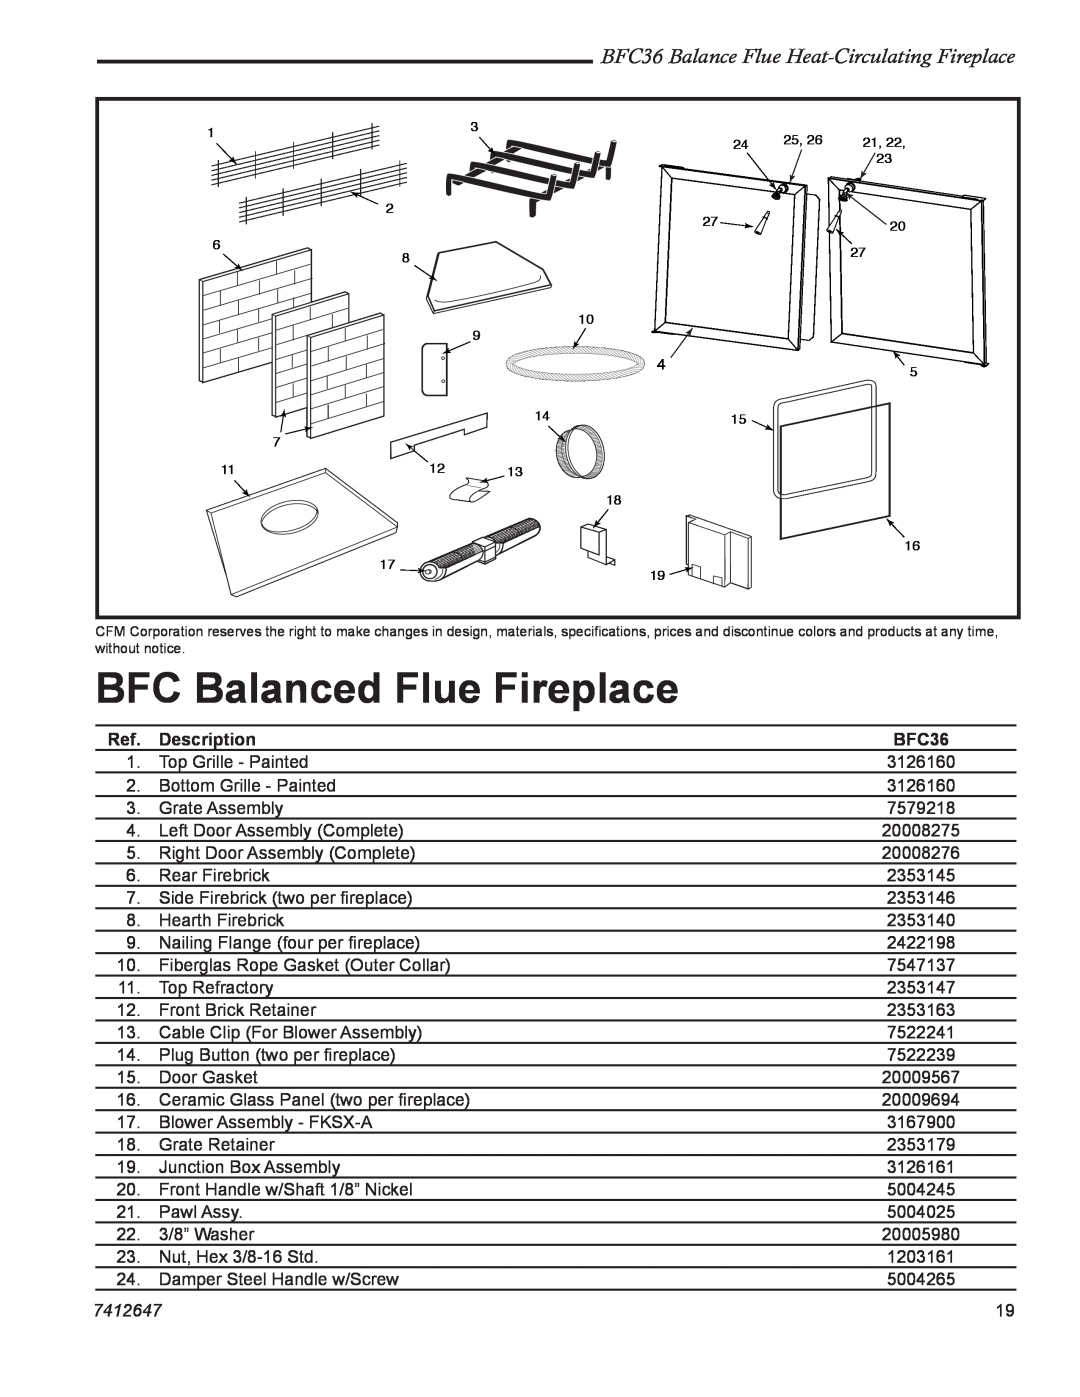 Vermont Casting manual BFC Balanced Flue Fireplace, BFC36 Balance Flue Heat-CirculatingFireplace, Description, 7412647 